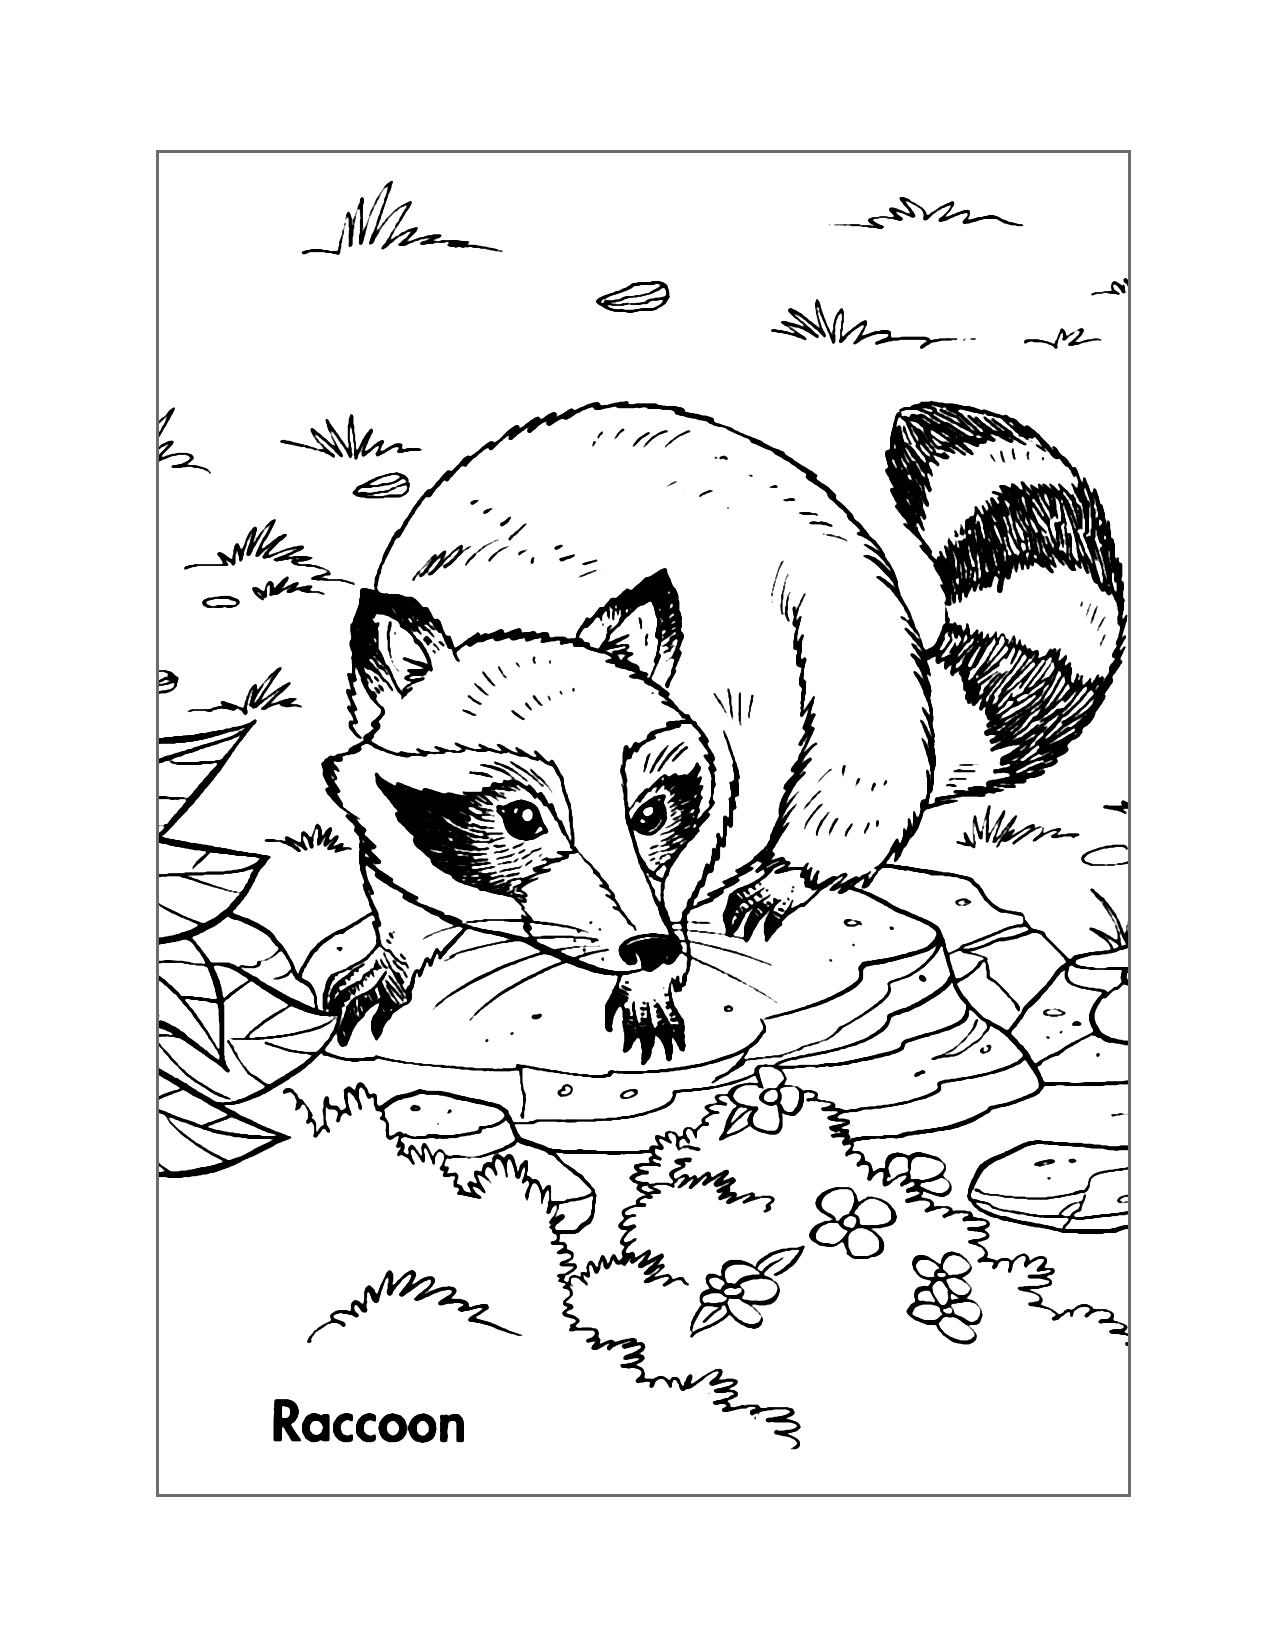 Raccoon Coloring Sheet